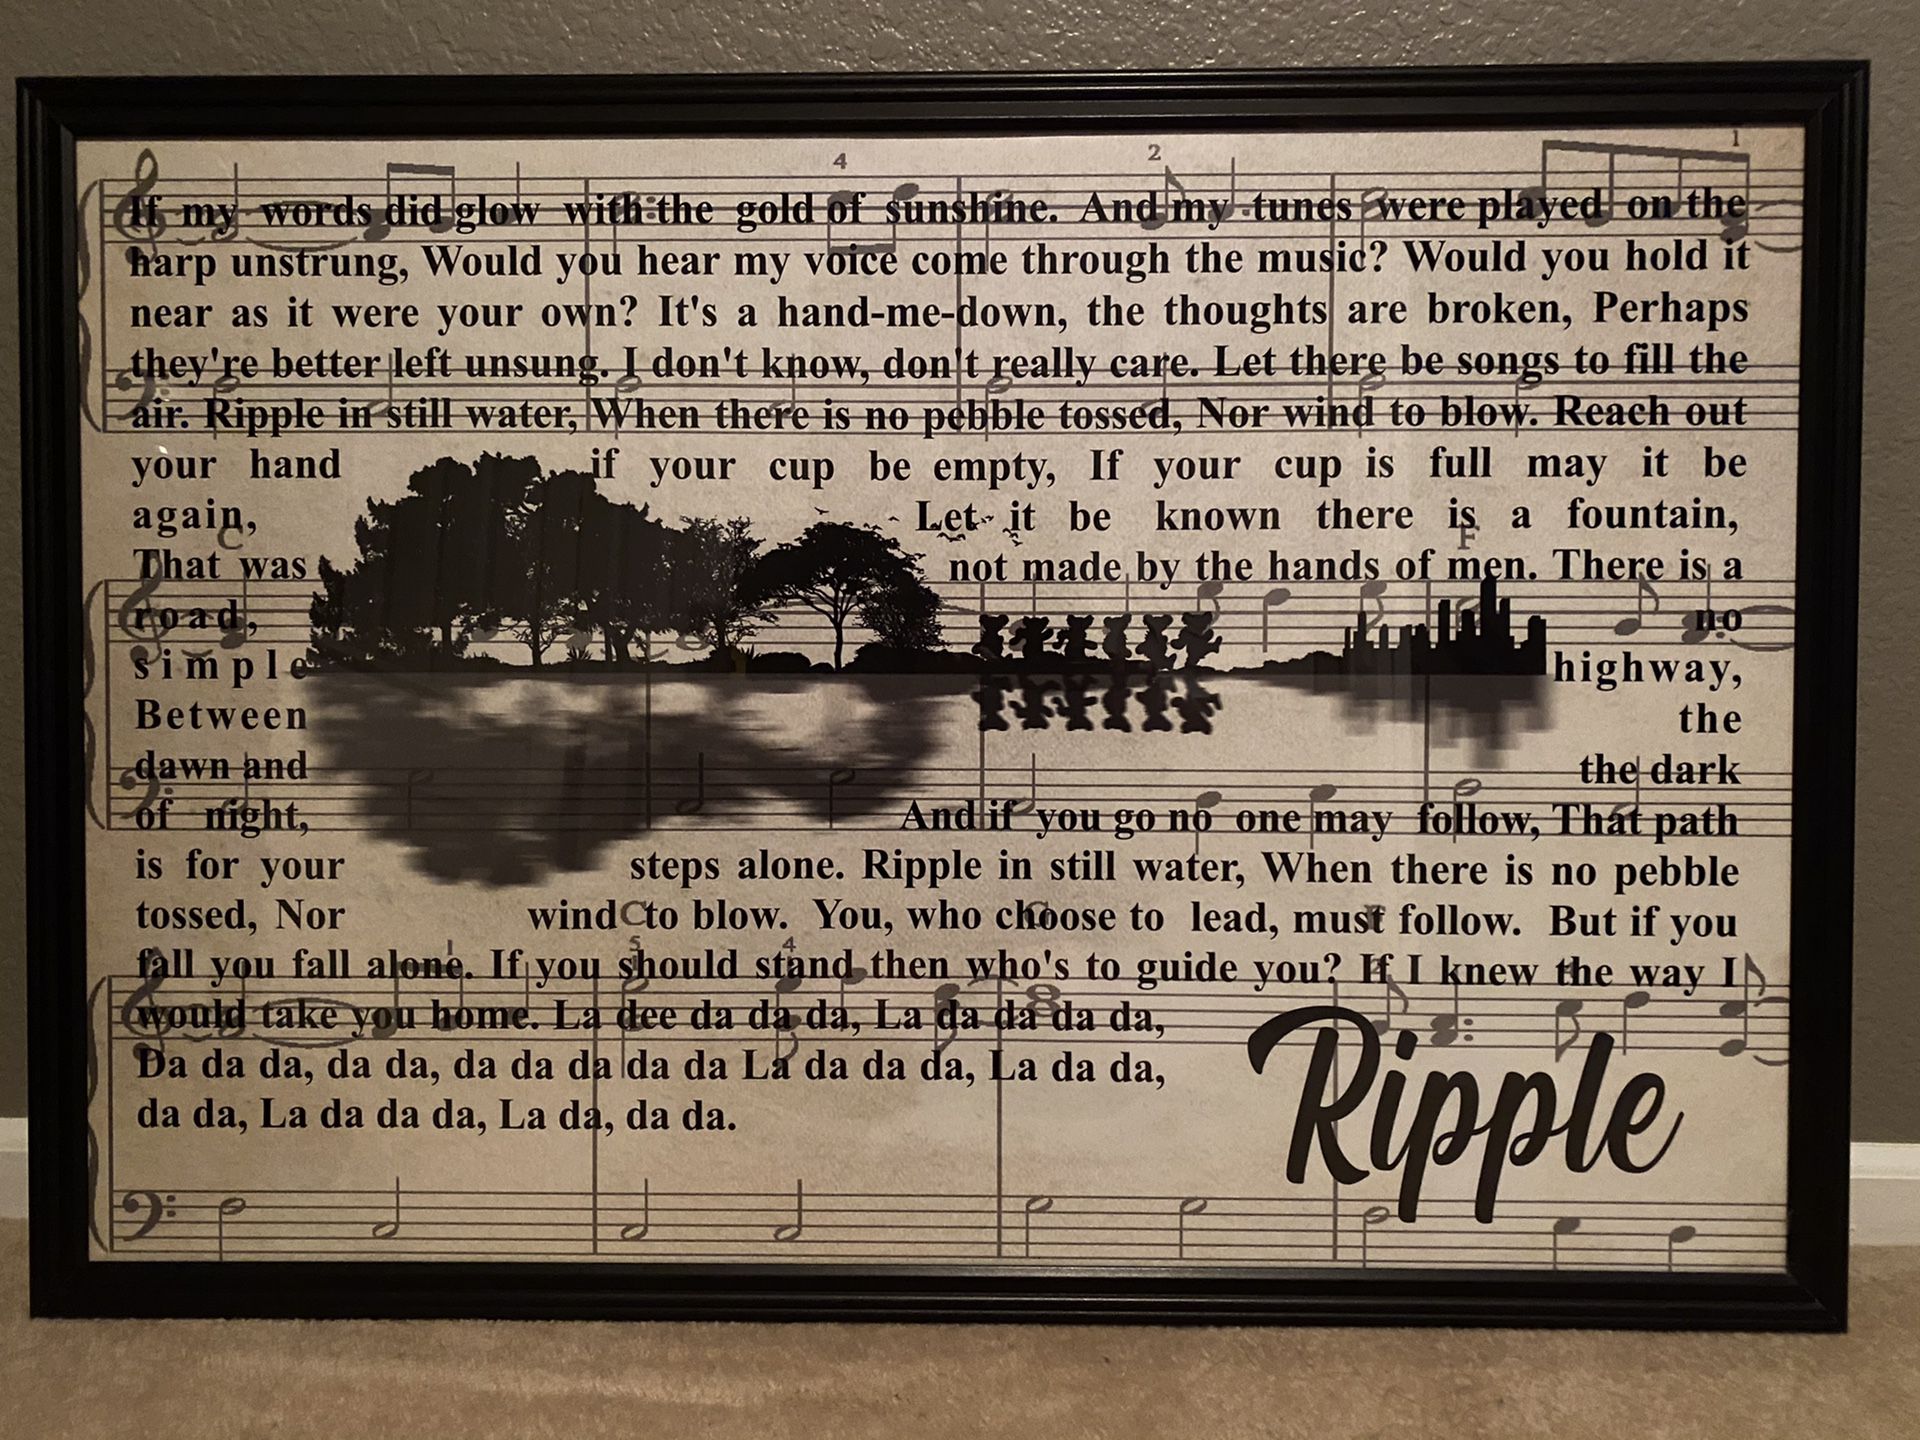 26” x 38” Grateful Dead “Ripple” lyric poster framed